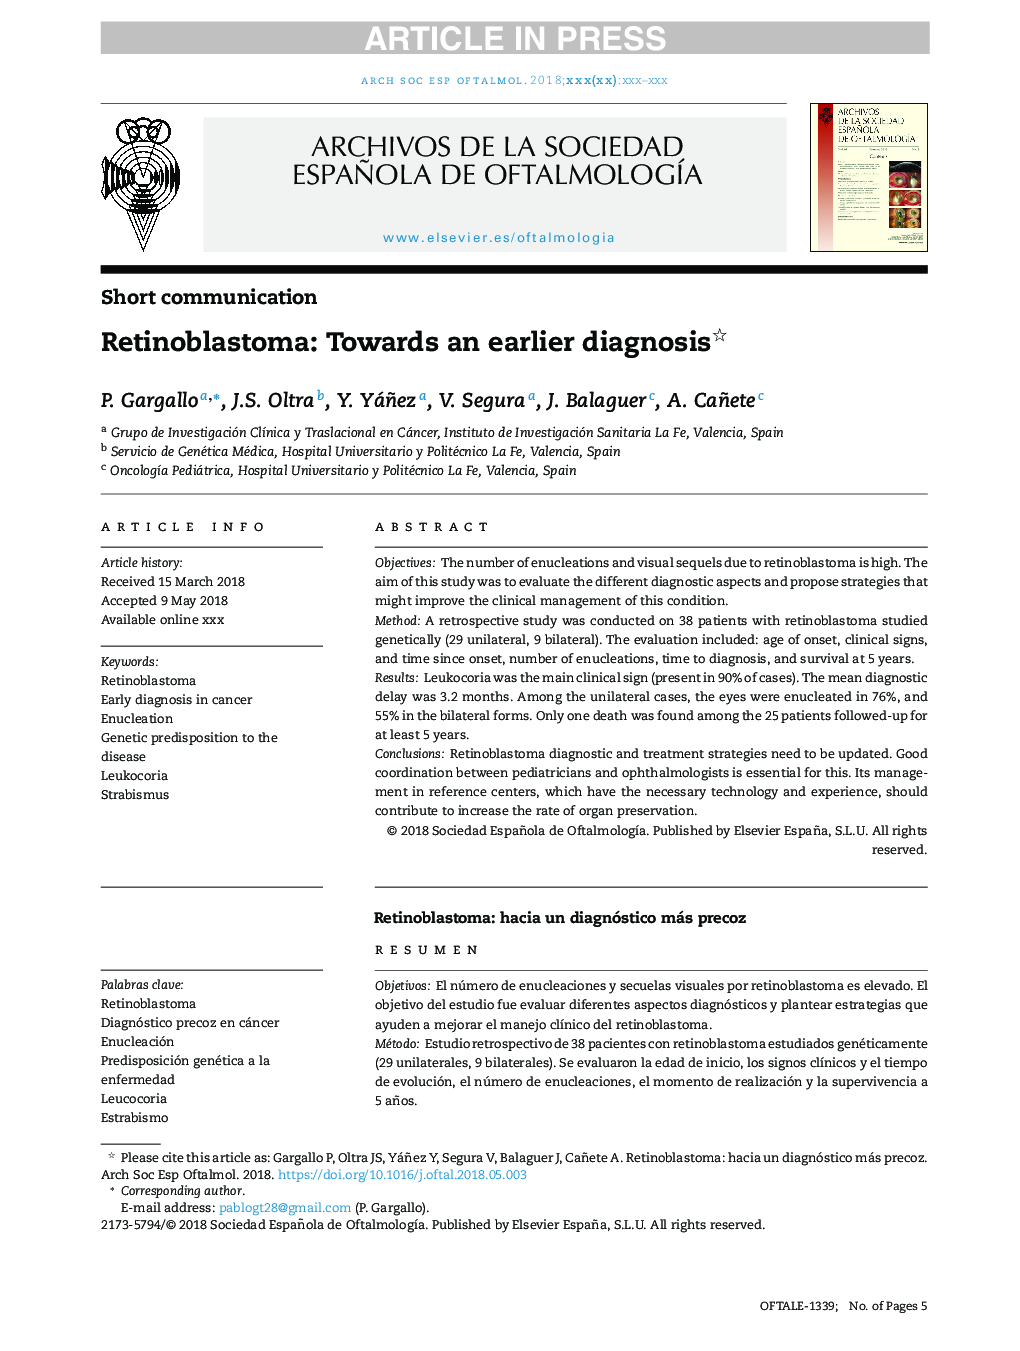 Retinoblastoma: Towards an earlier diagnosis